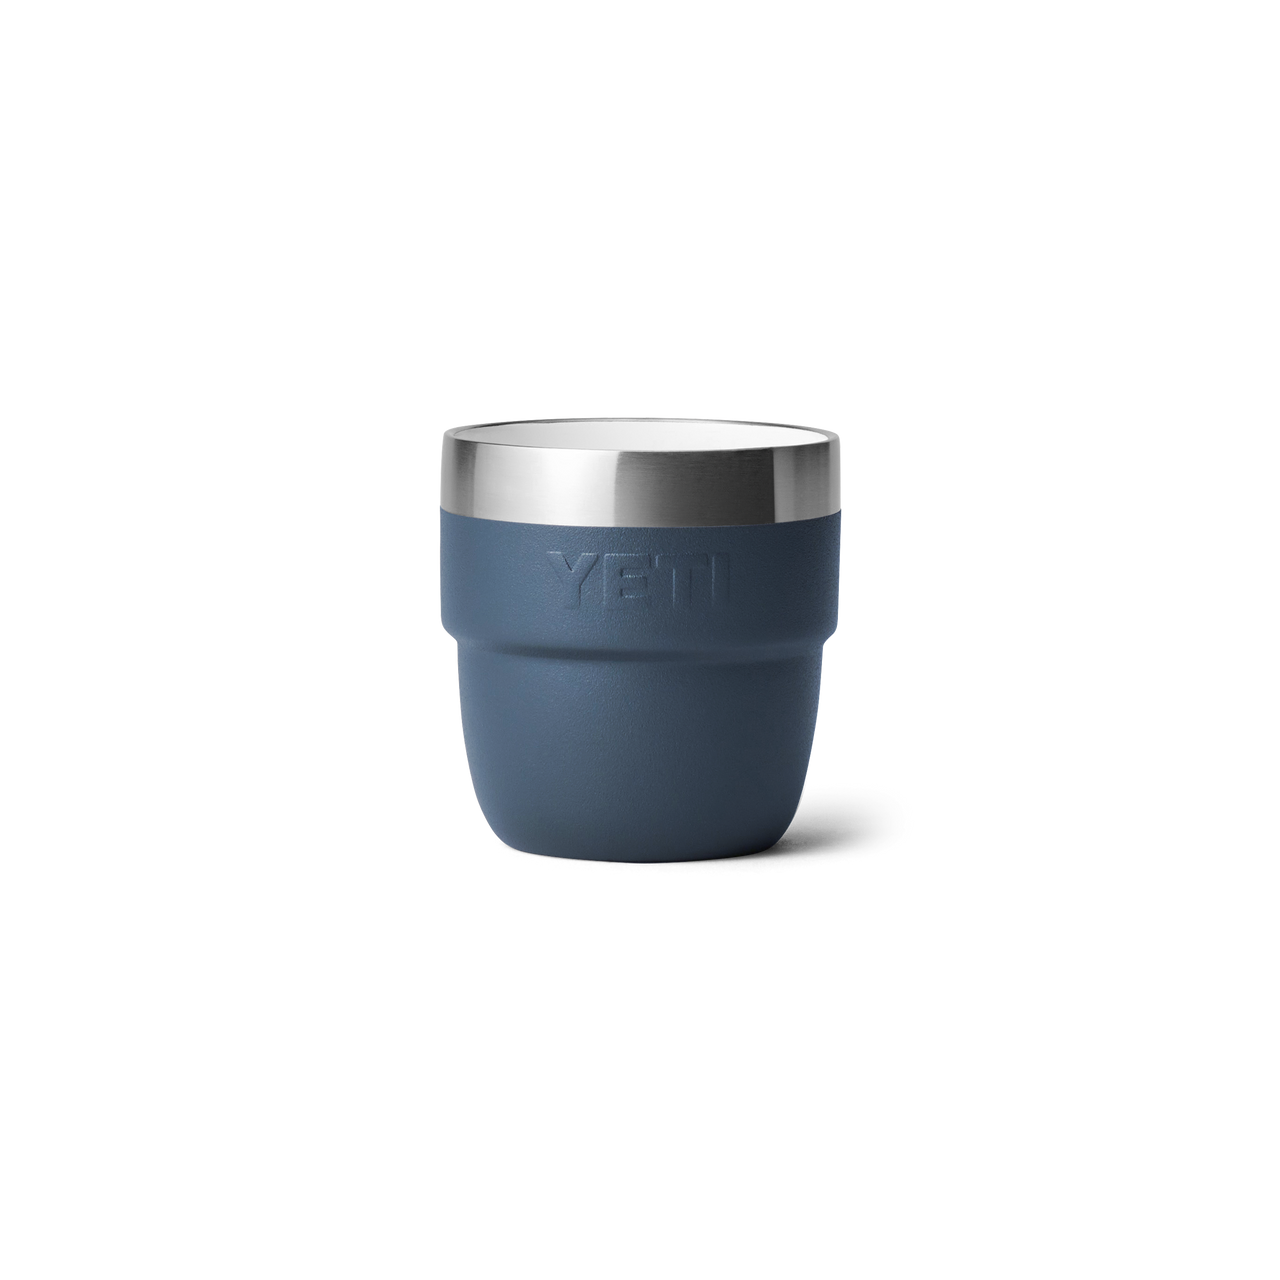 YETI Rambler 4-oz. Espresso Stackable Cup 2-Pack